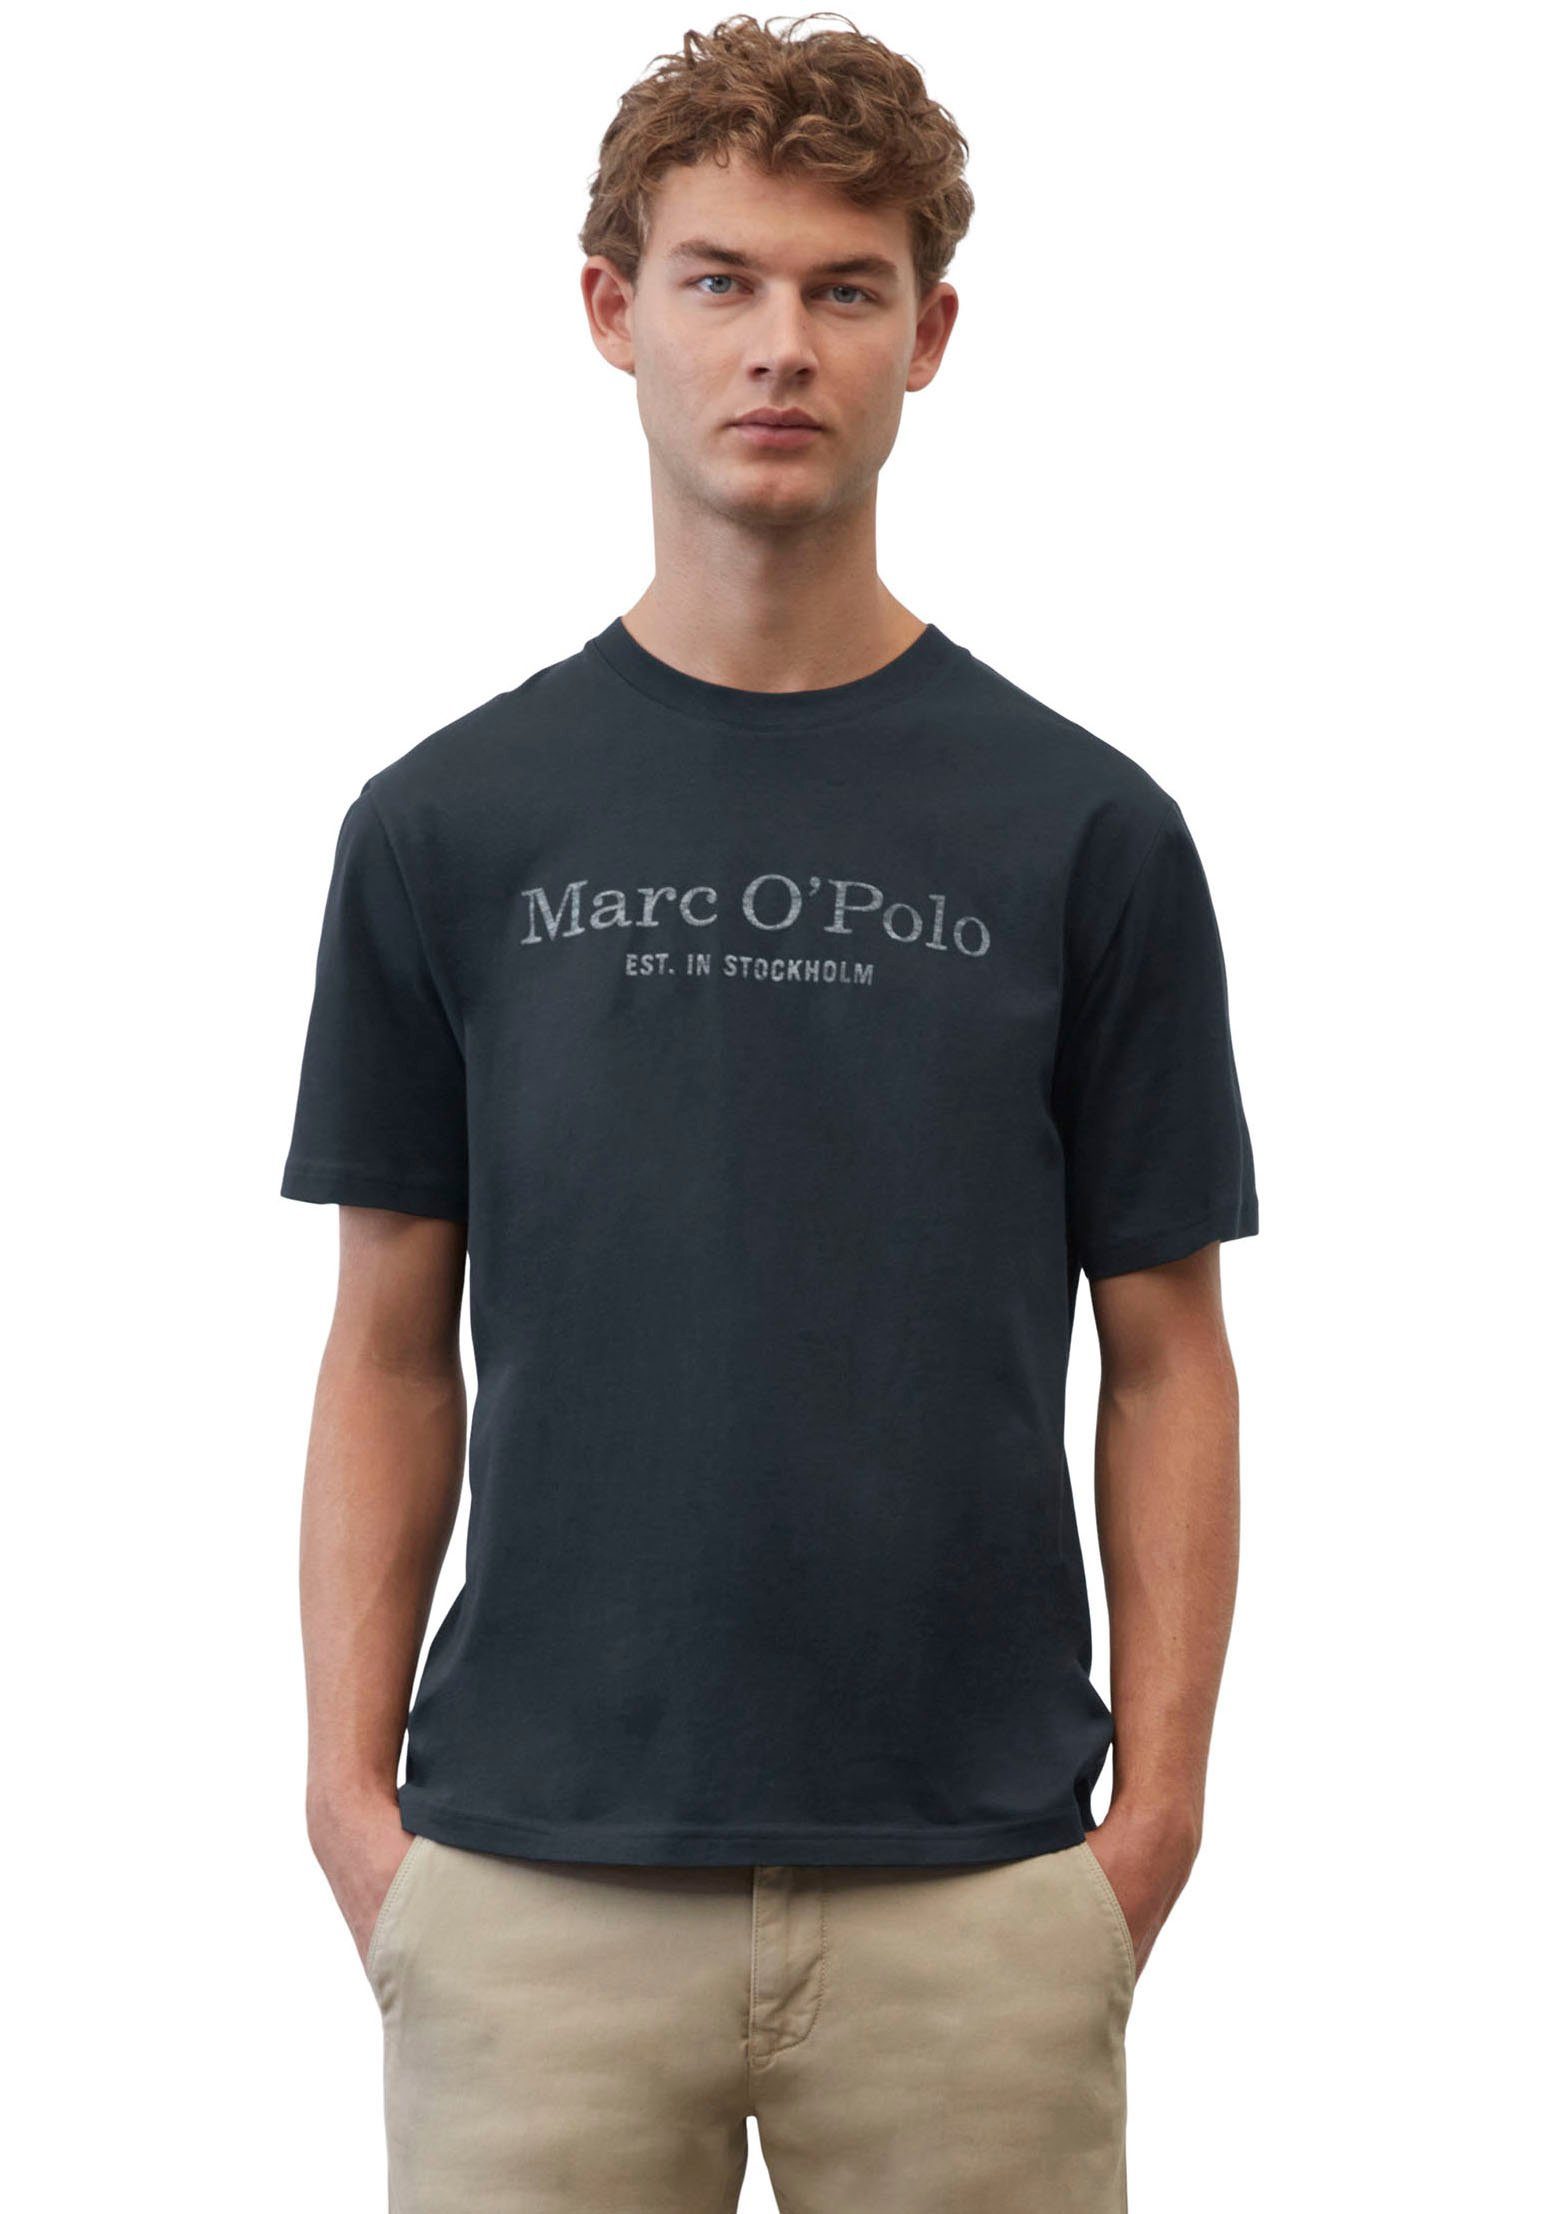 Marc O'Polo T-Shirt klassisches Logo-T-Shirt dark night | T-Shirts